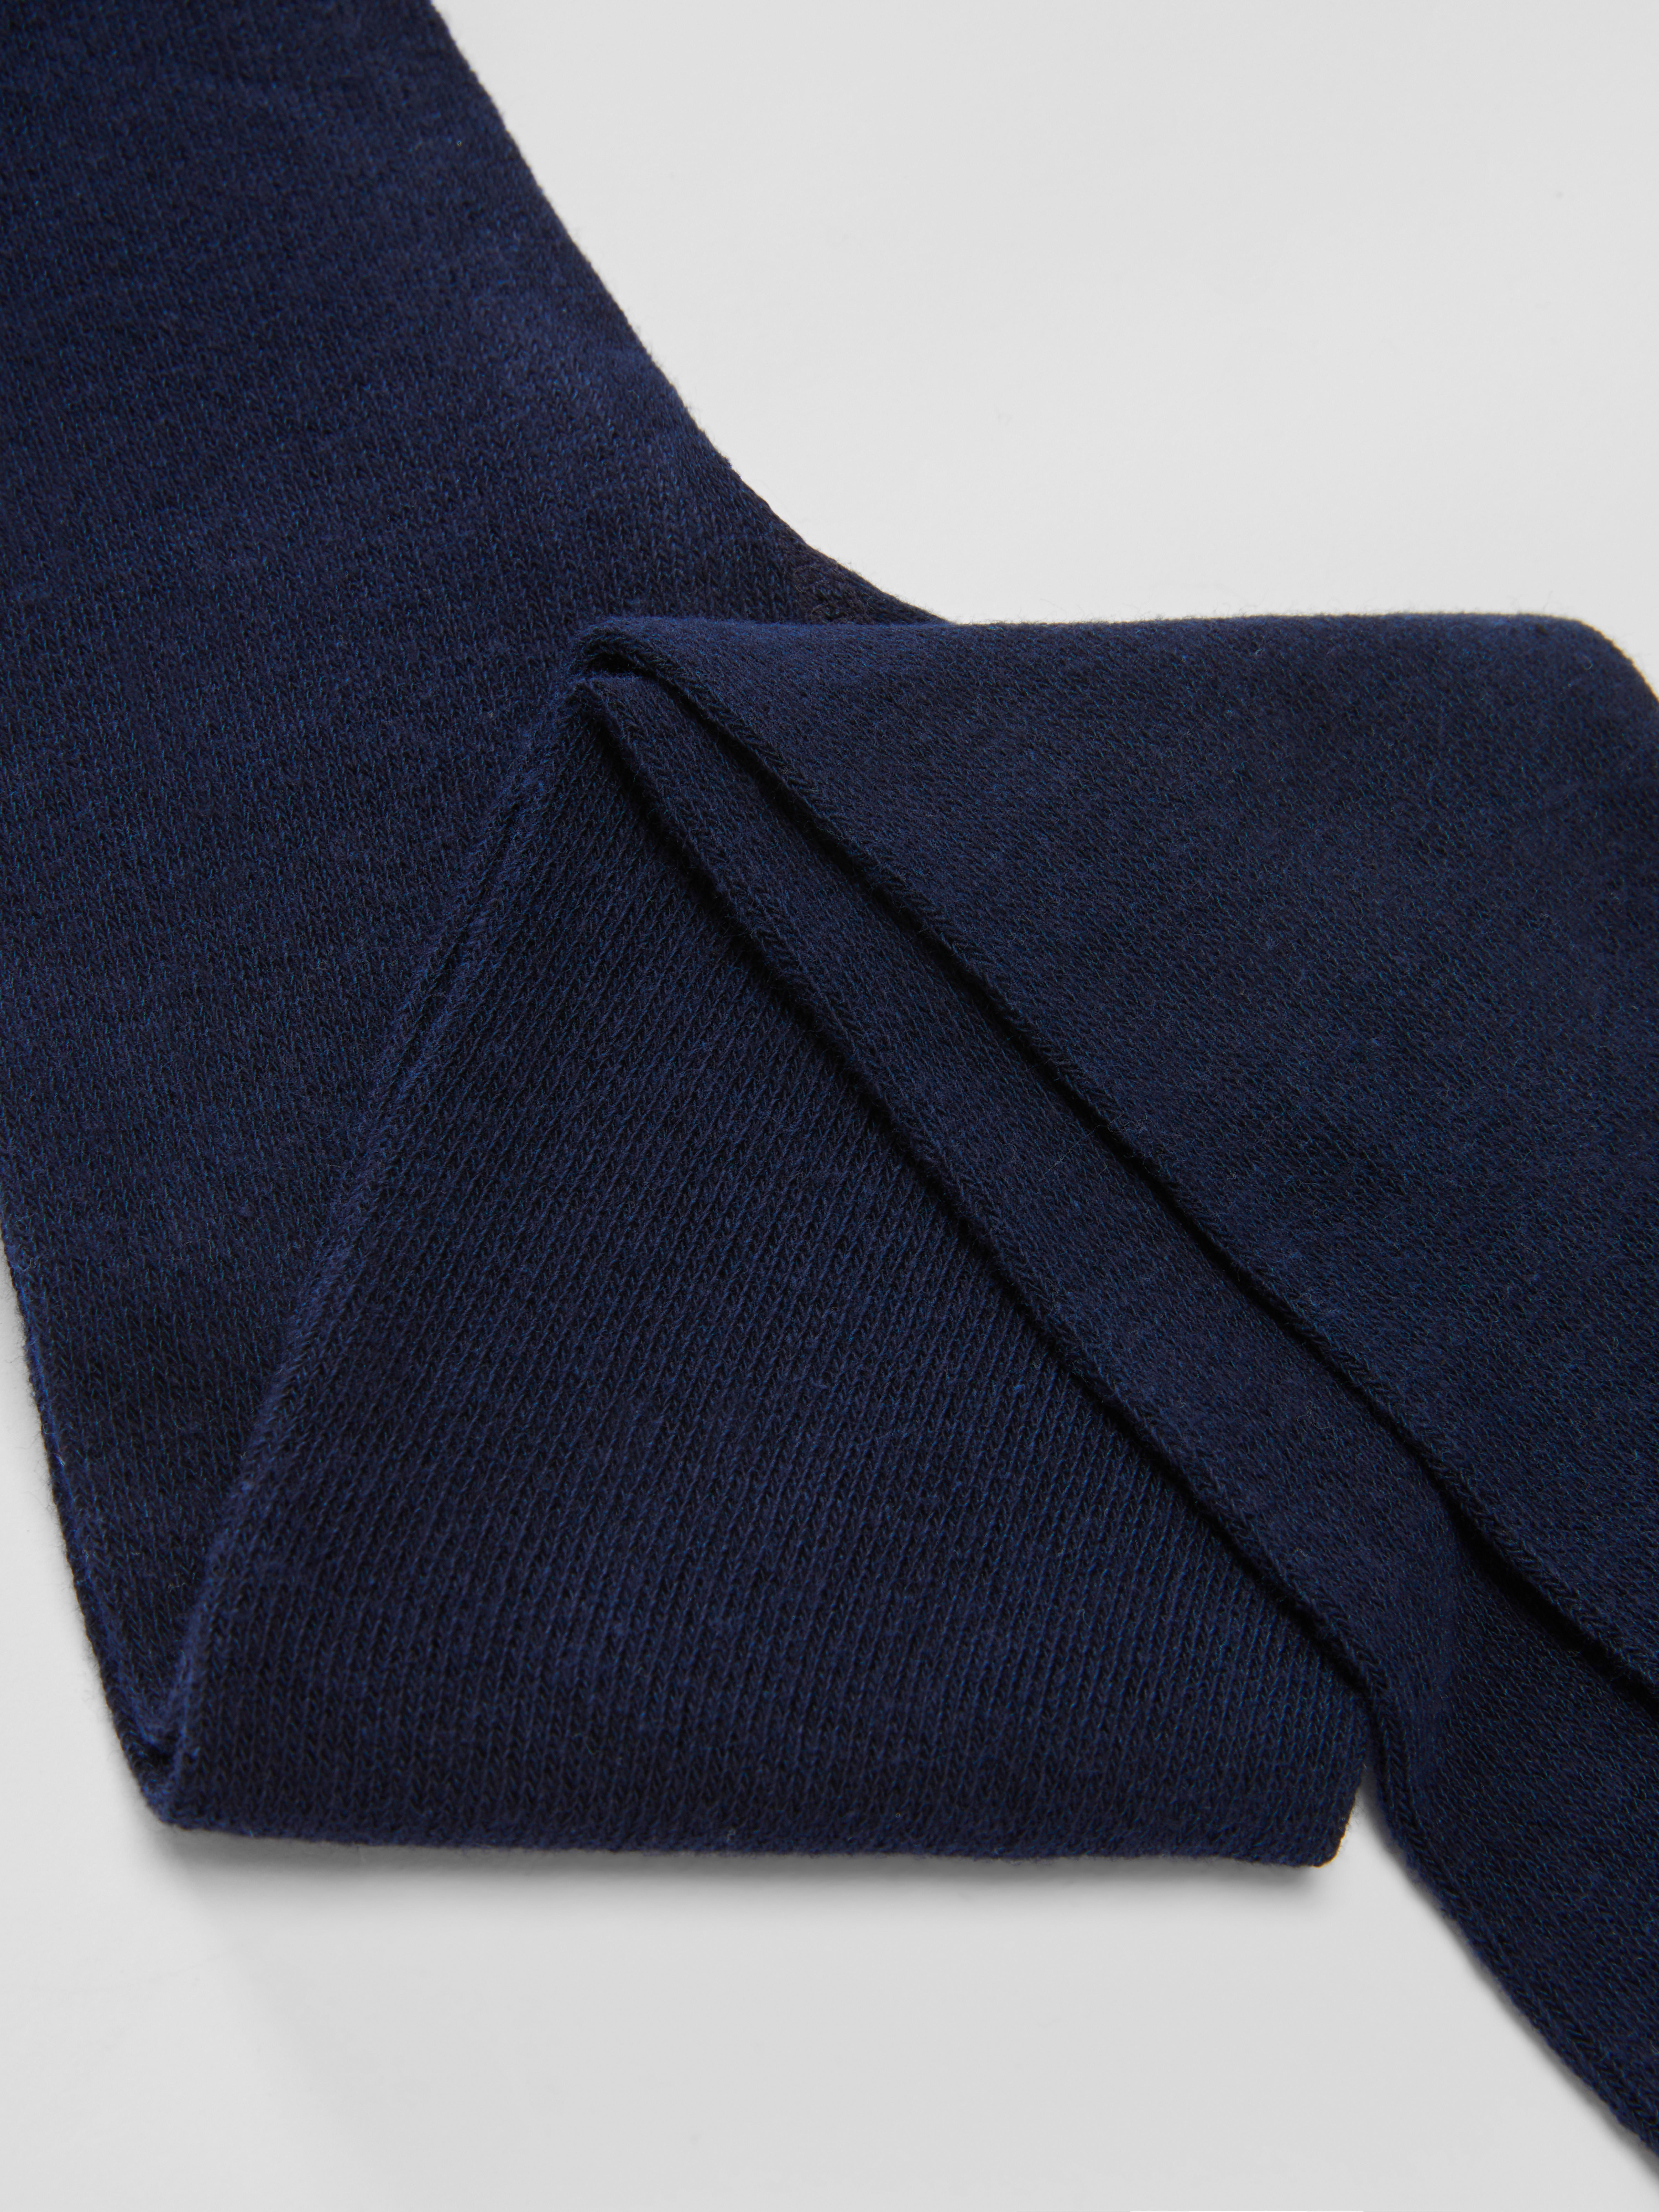 Primark Navy Blue Super Soft Knit Tights 2 Pair